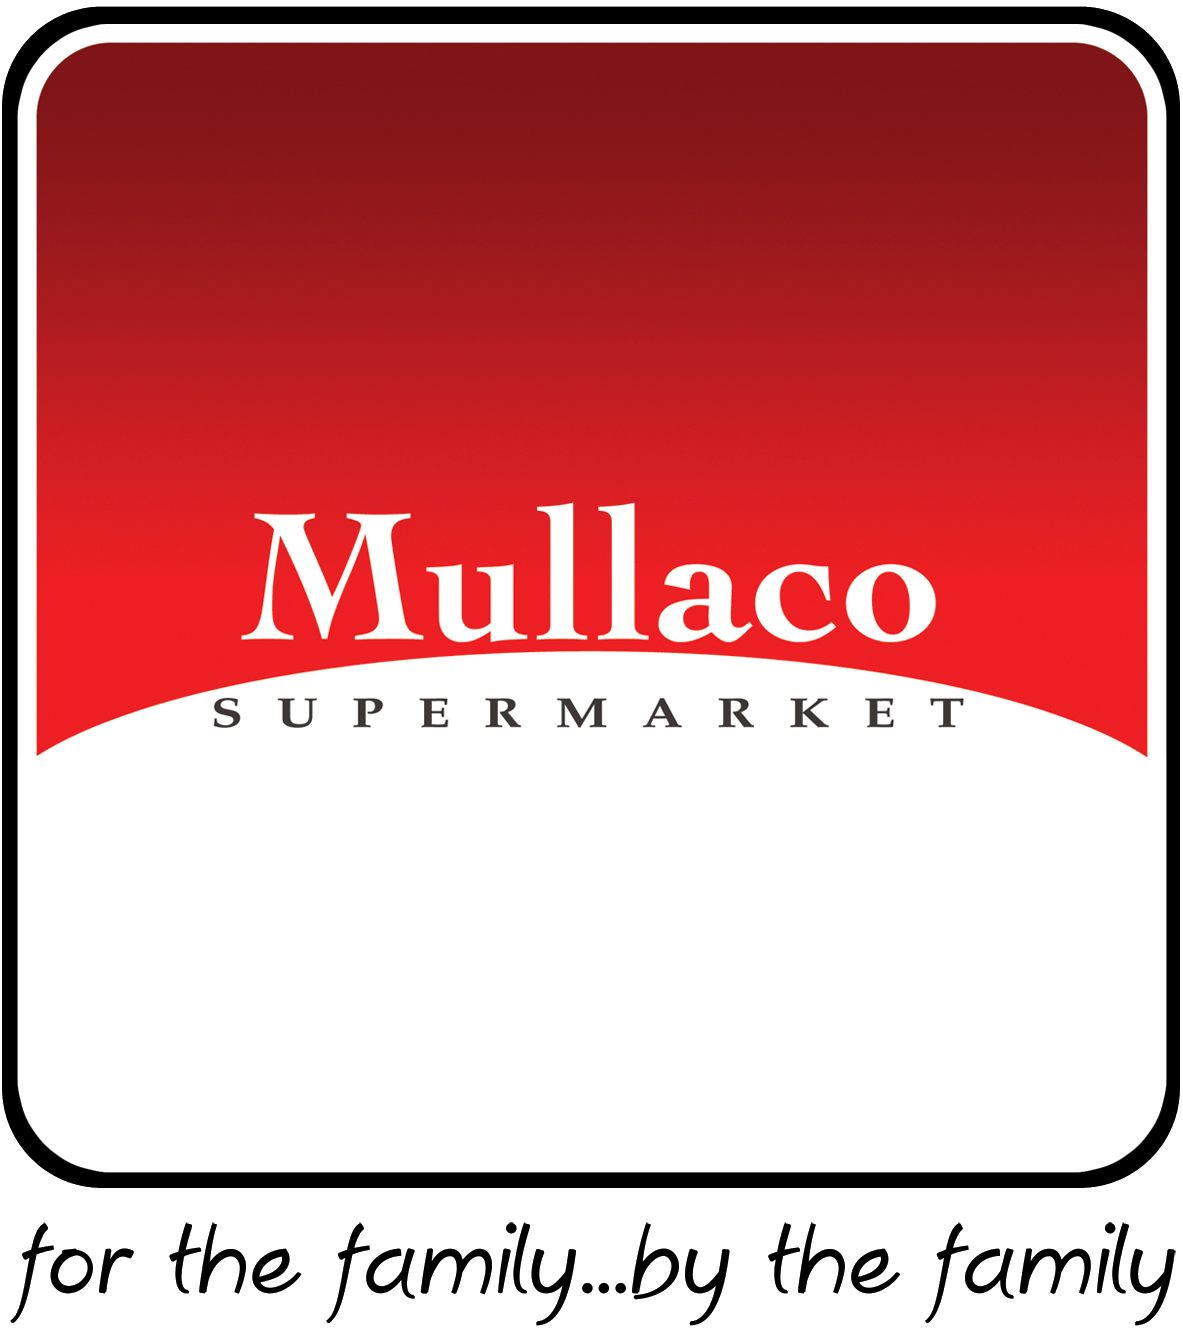 Red and White Supermarket Logo - Mullaco Supermarket